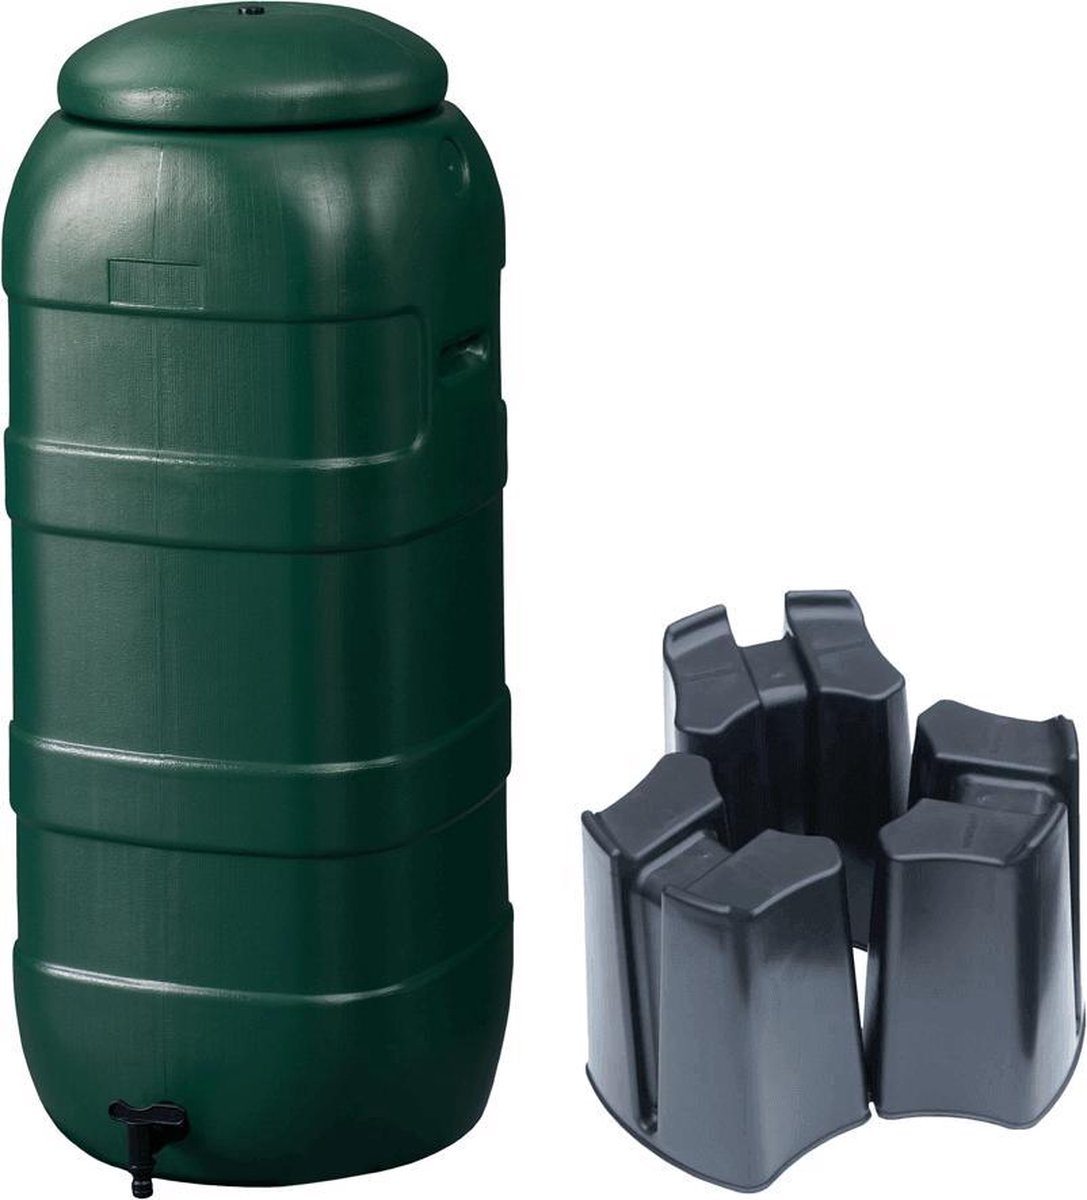 Regenton Rainsaver Groen 100 liter + Voet - Harcostar